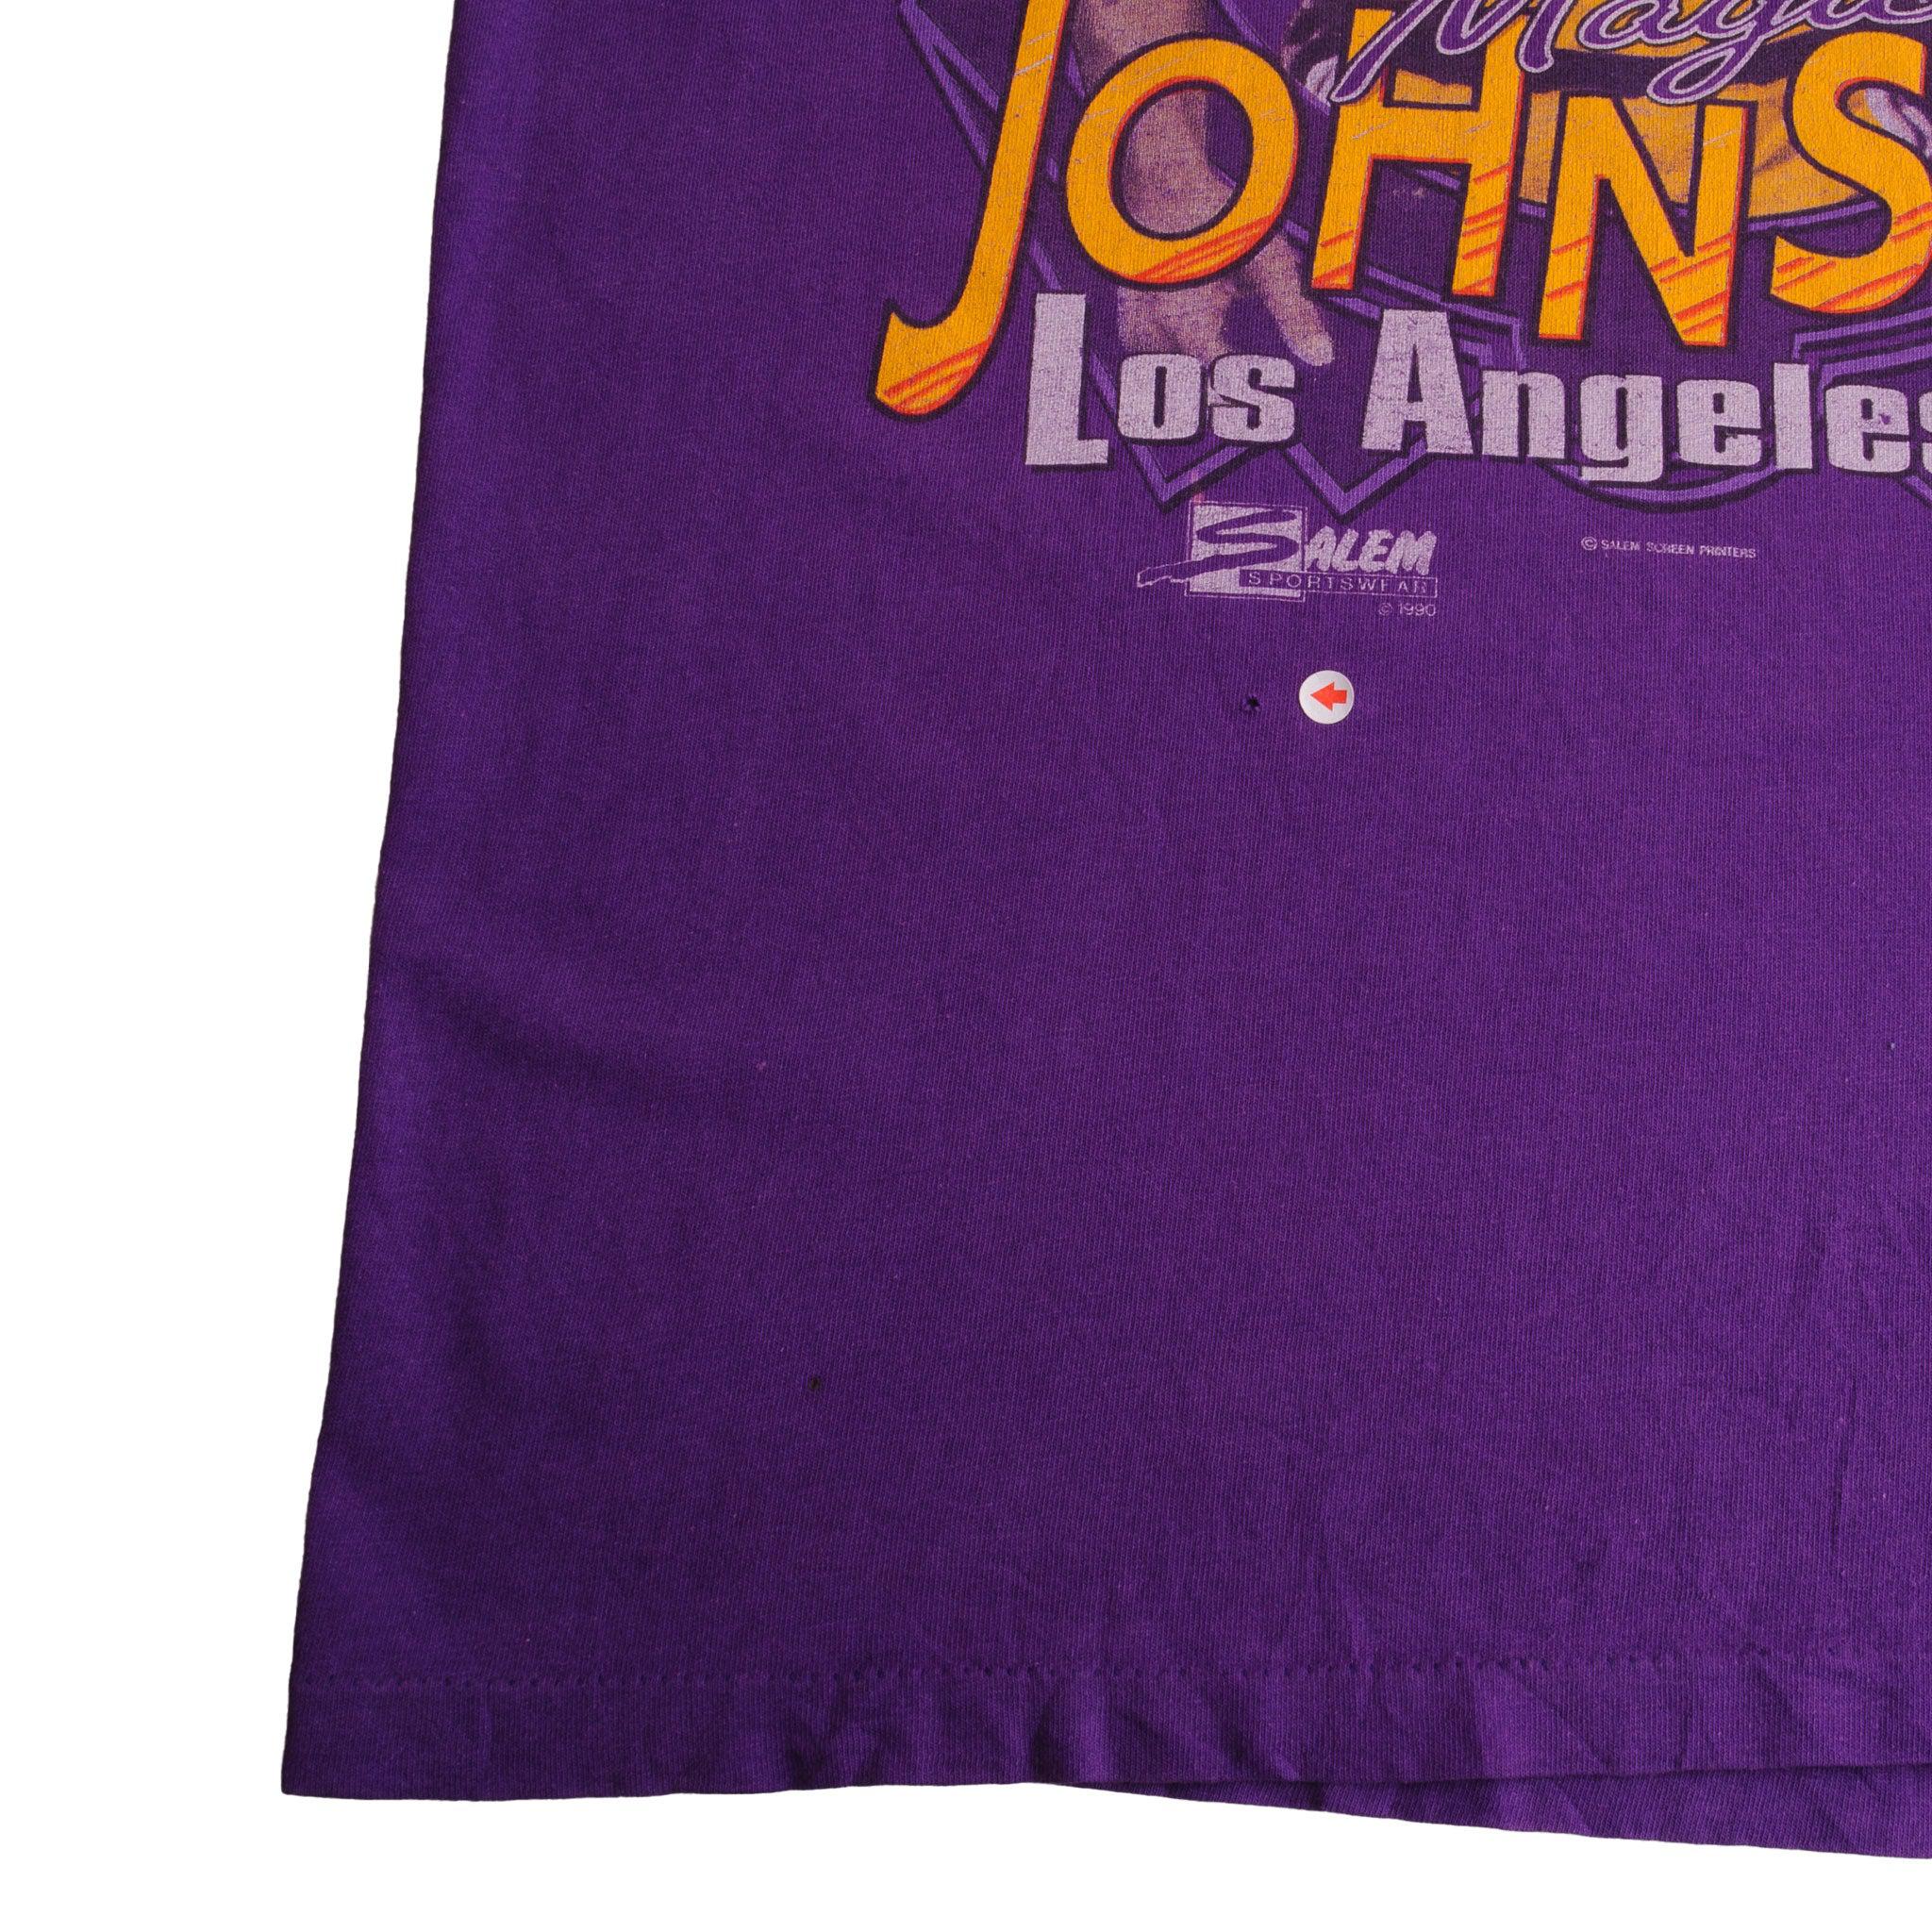 Vintage NBA La Lakers Magic Johnson Tee Shirt 1989 XL Made in USA